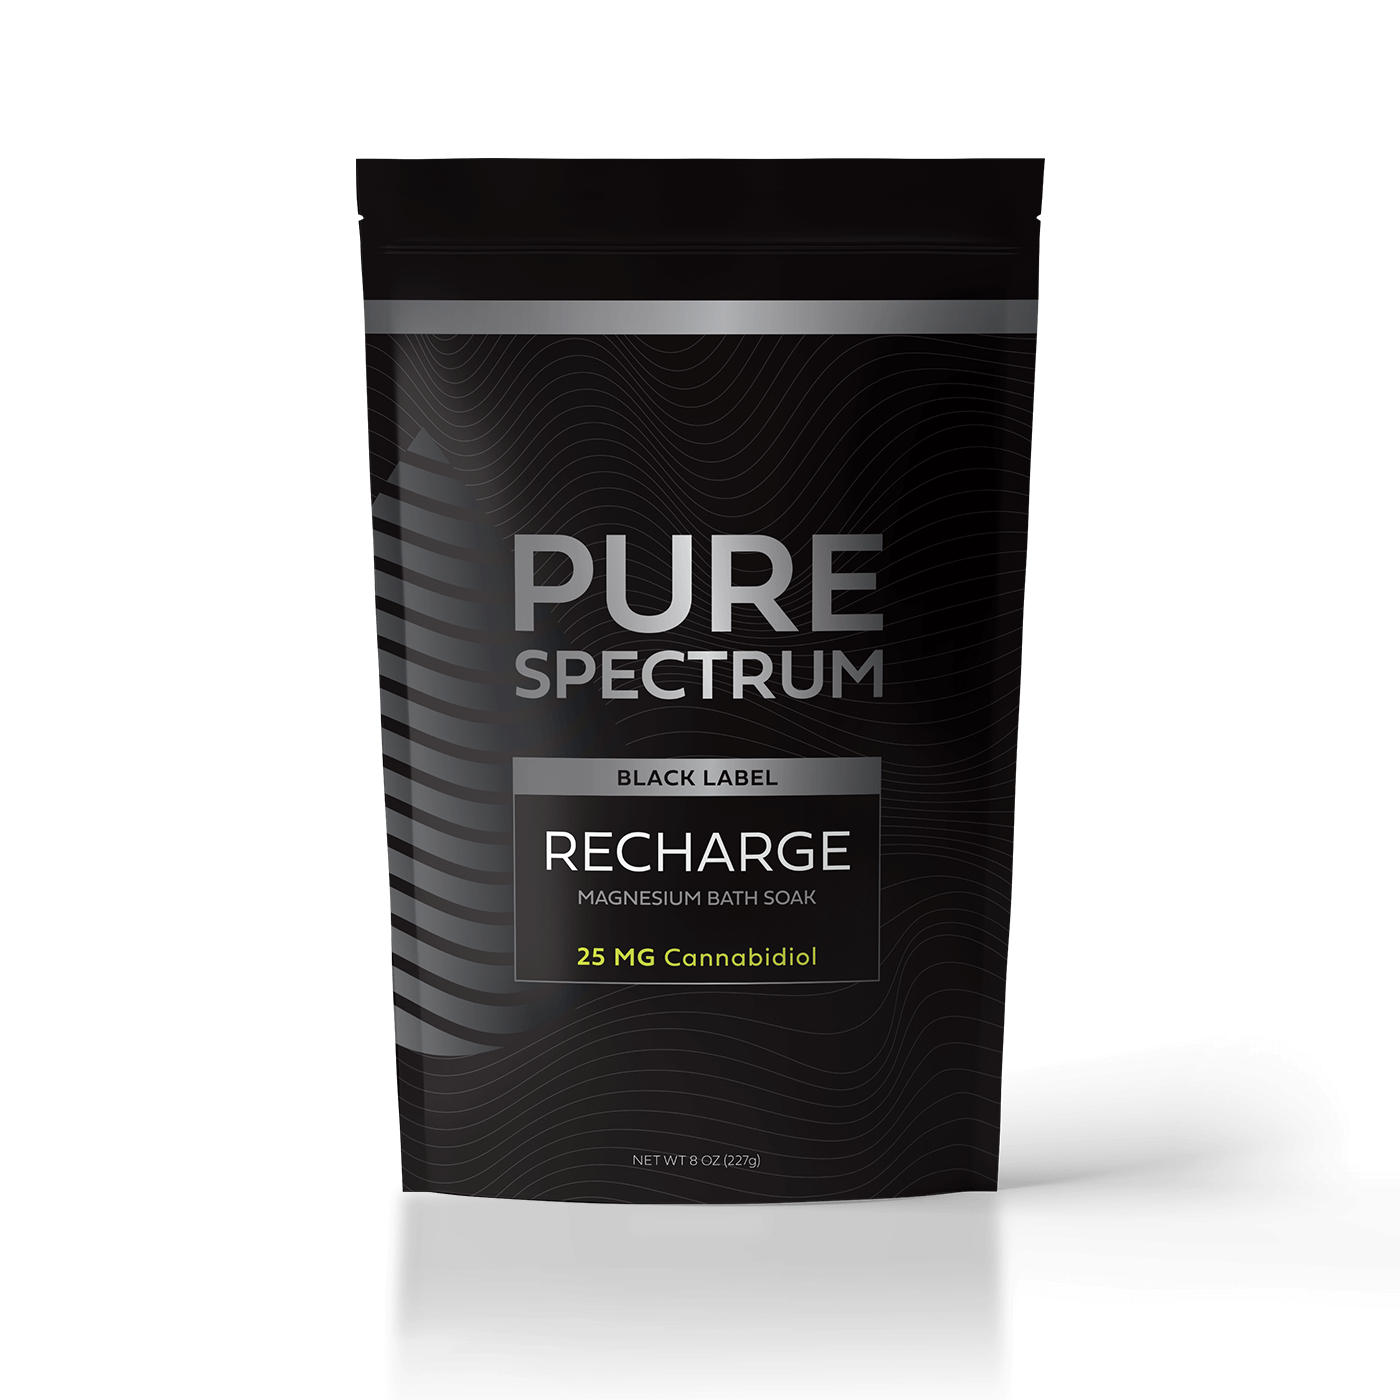 Pure Spectrum Recharge Magnesium Bath Soak 25 mg image